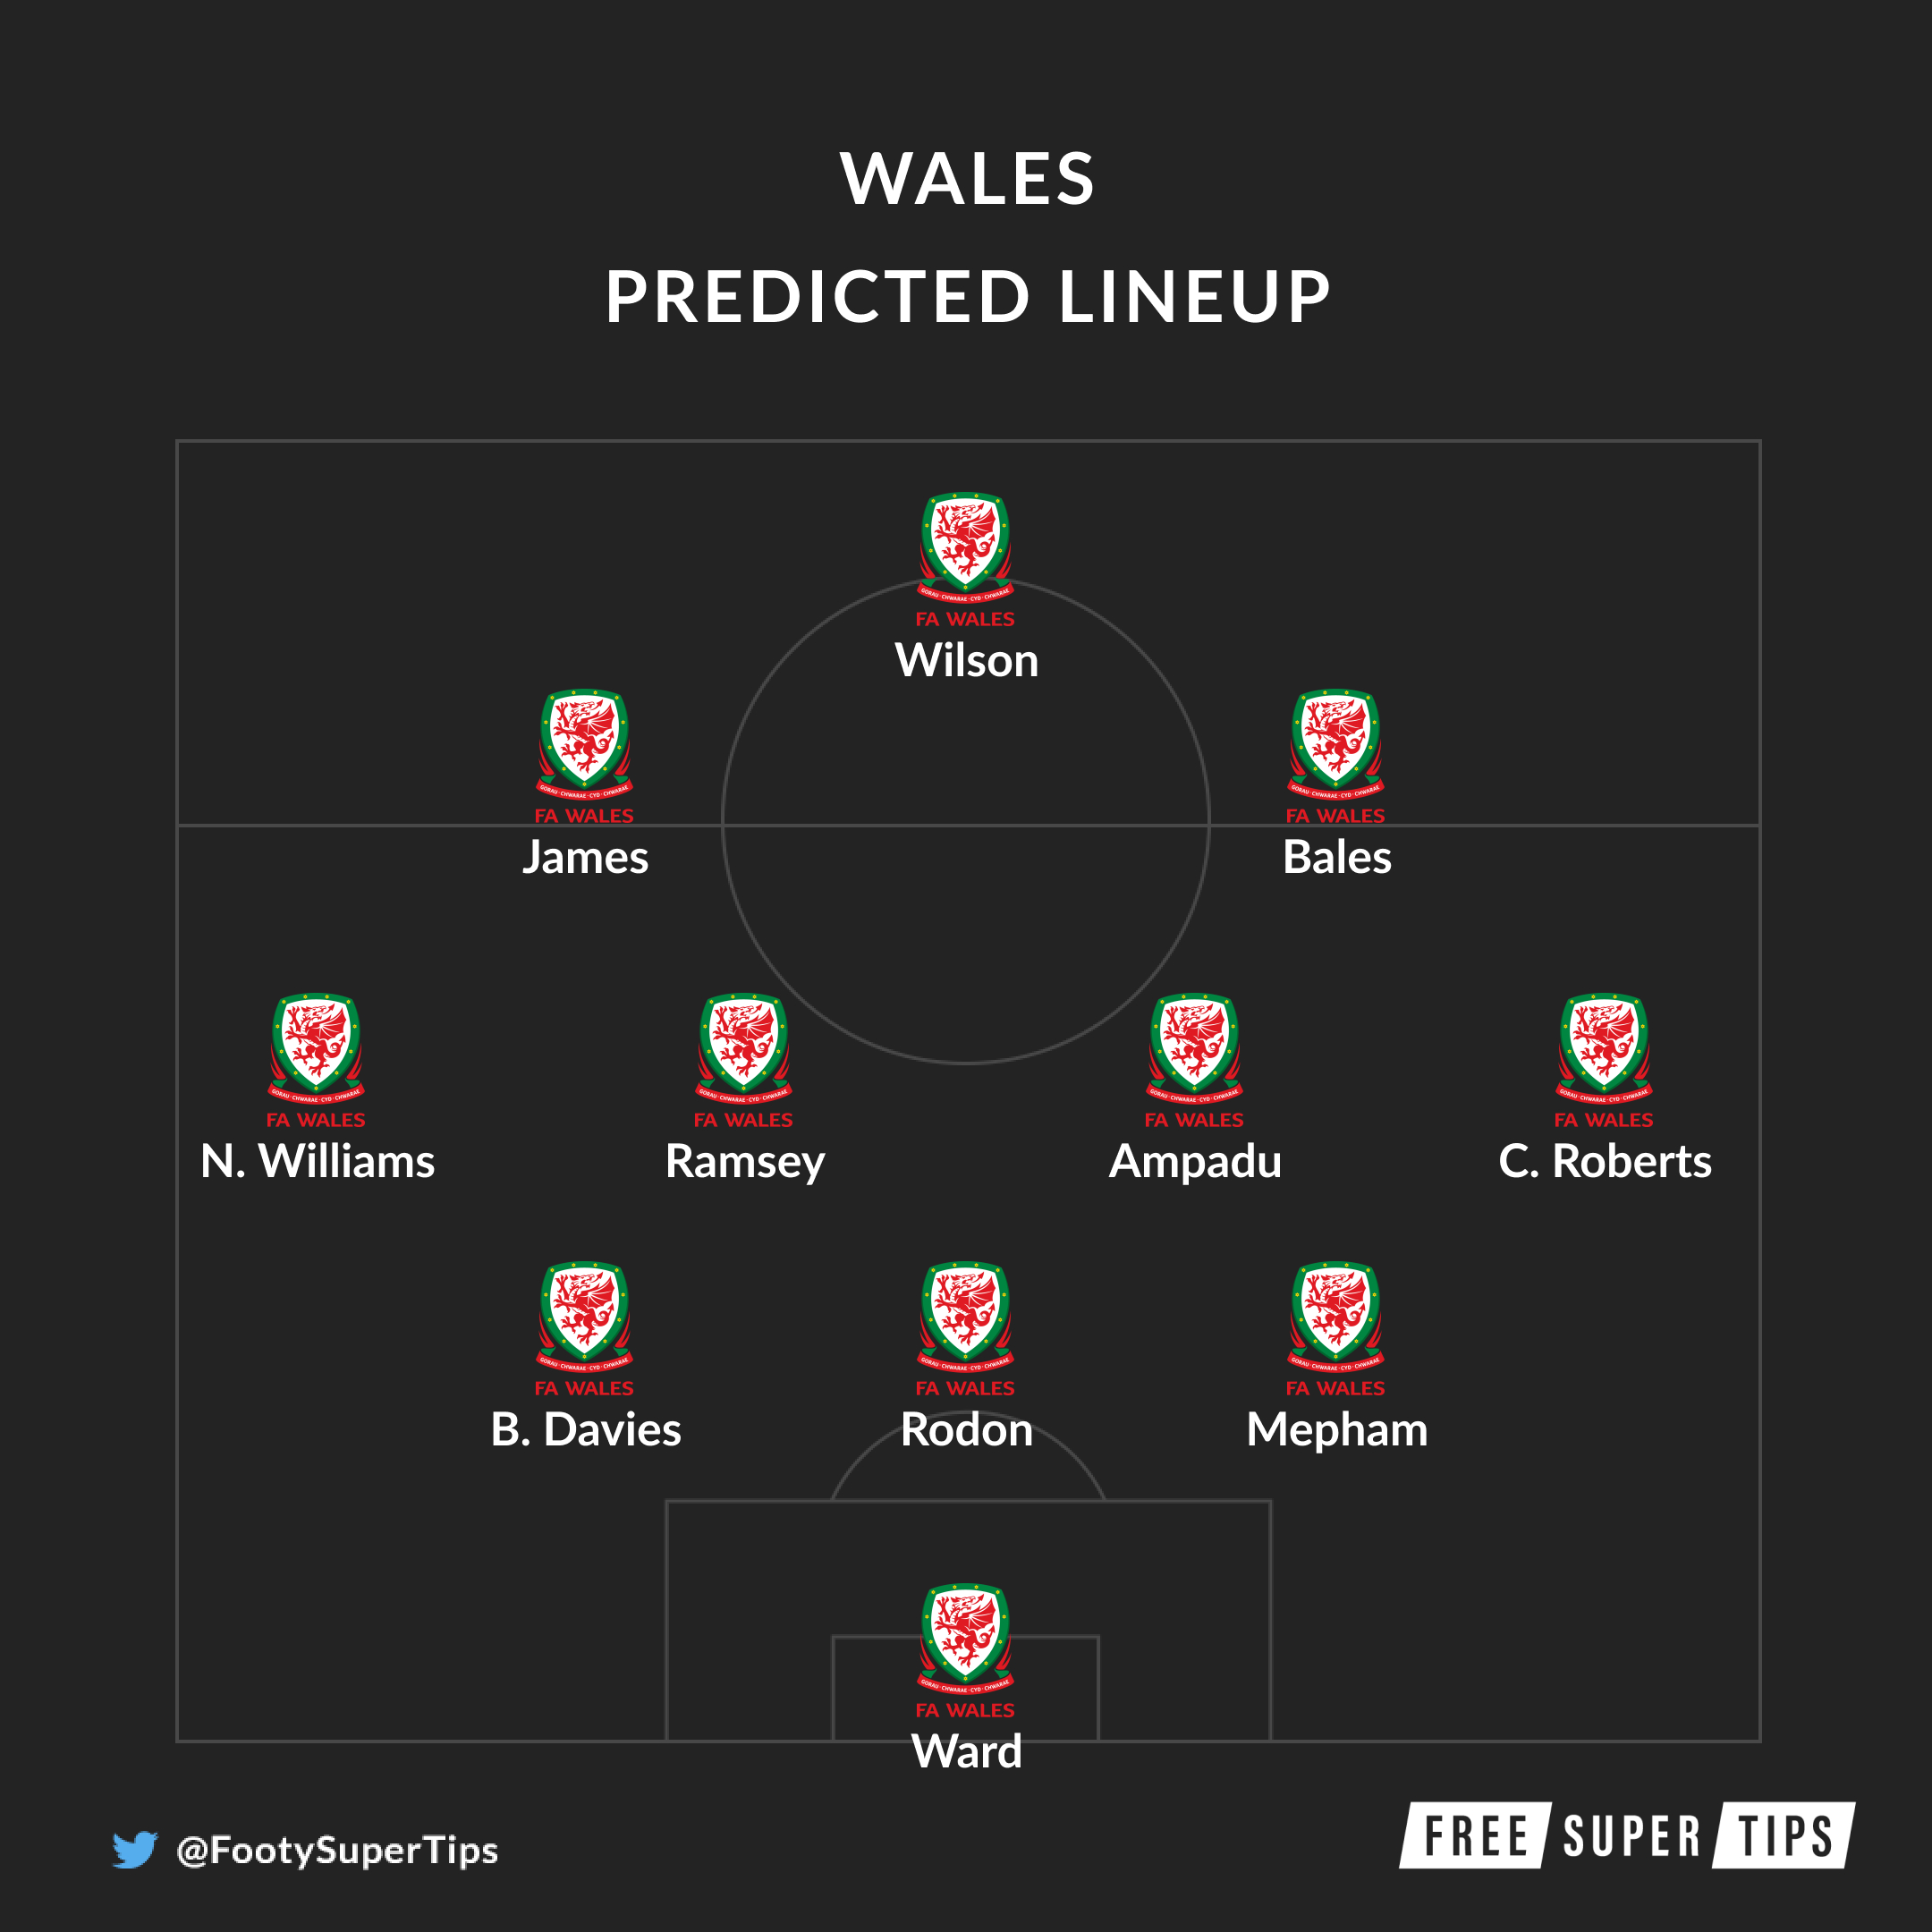 Wales predicted lineup